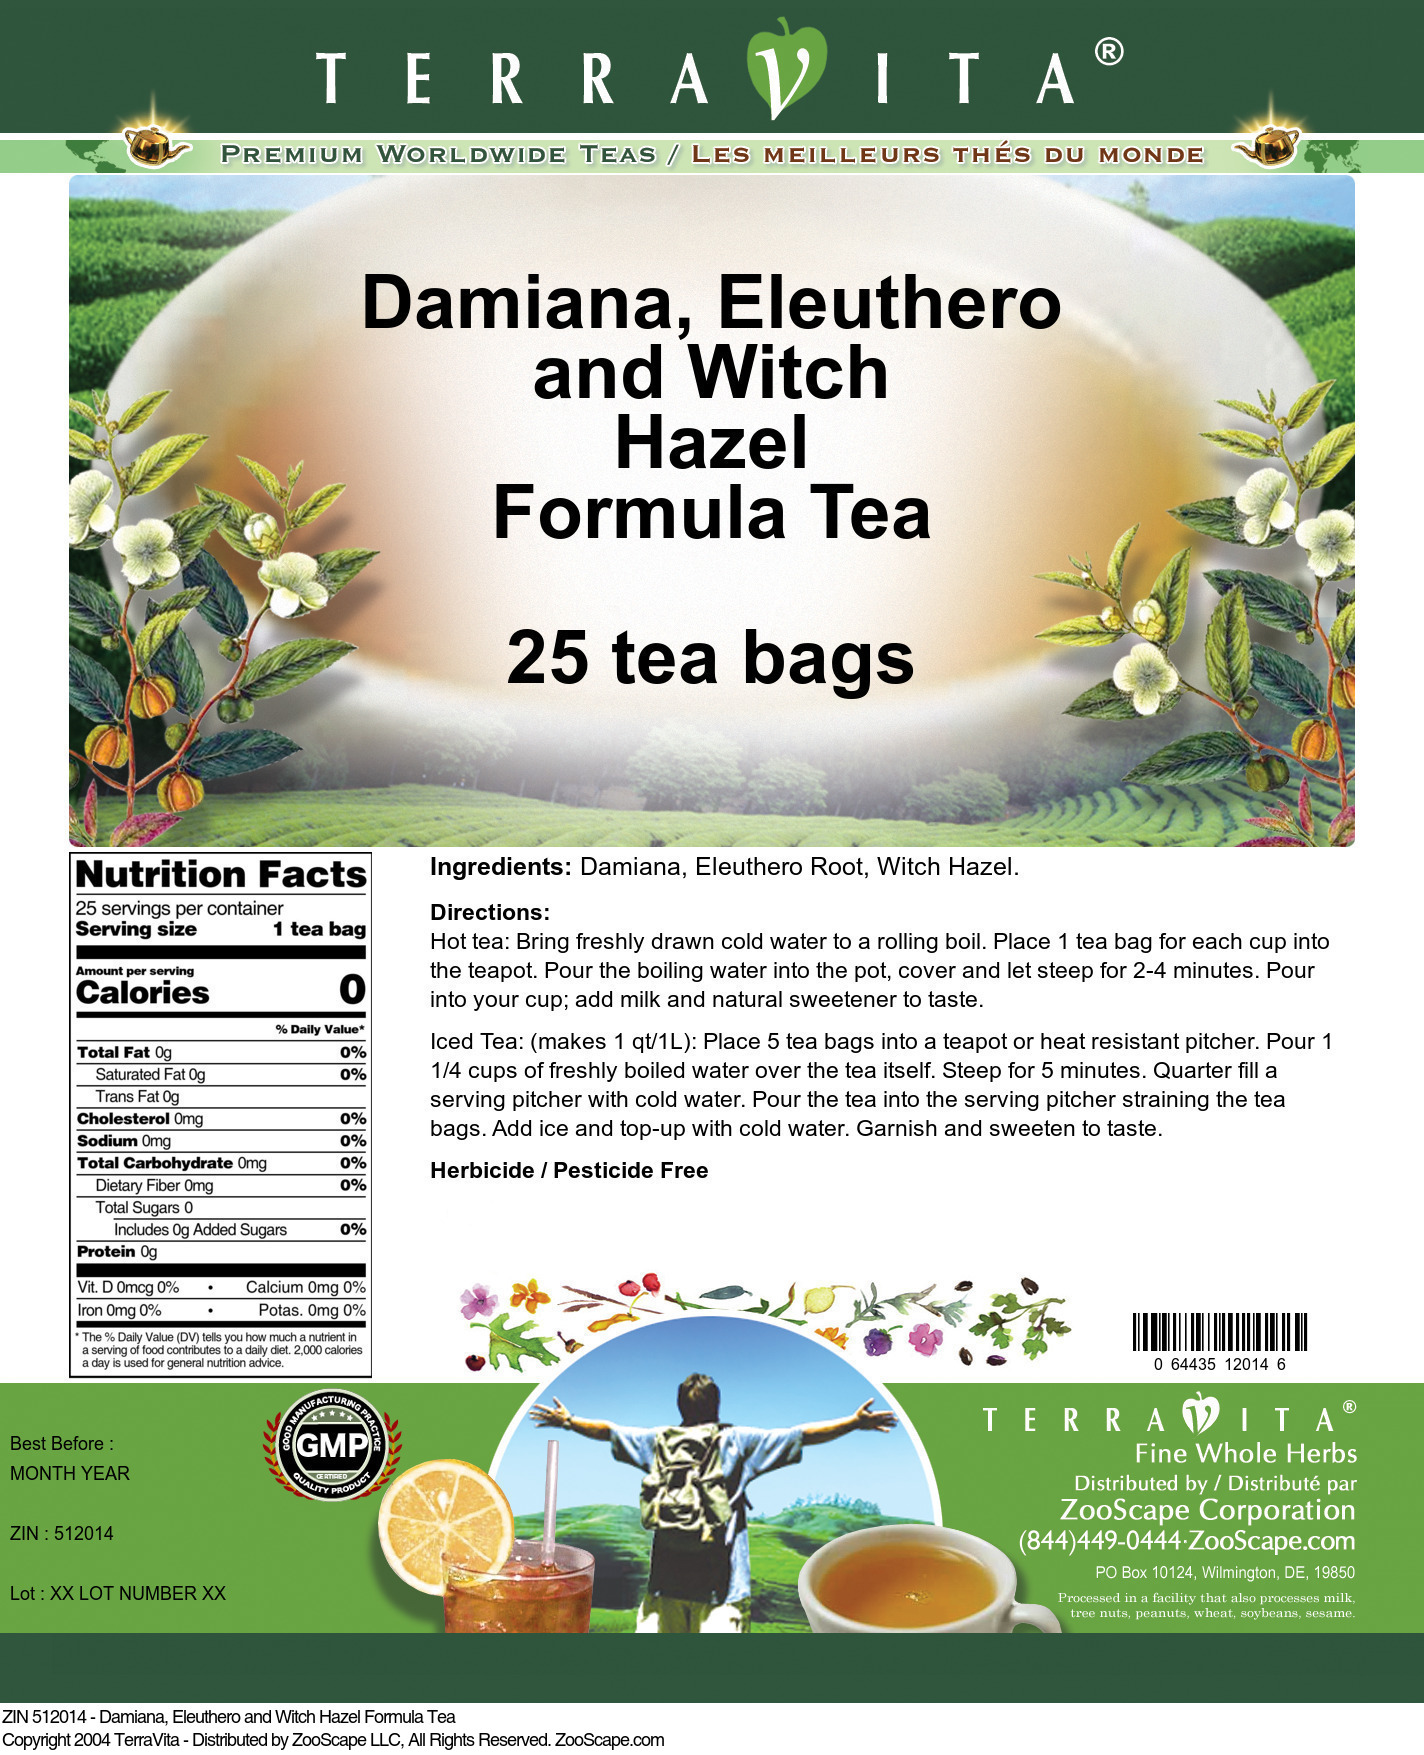 Damiana, Eleuthero and Witch Hazel Formula Tea - Label